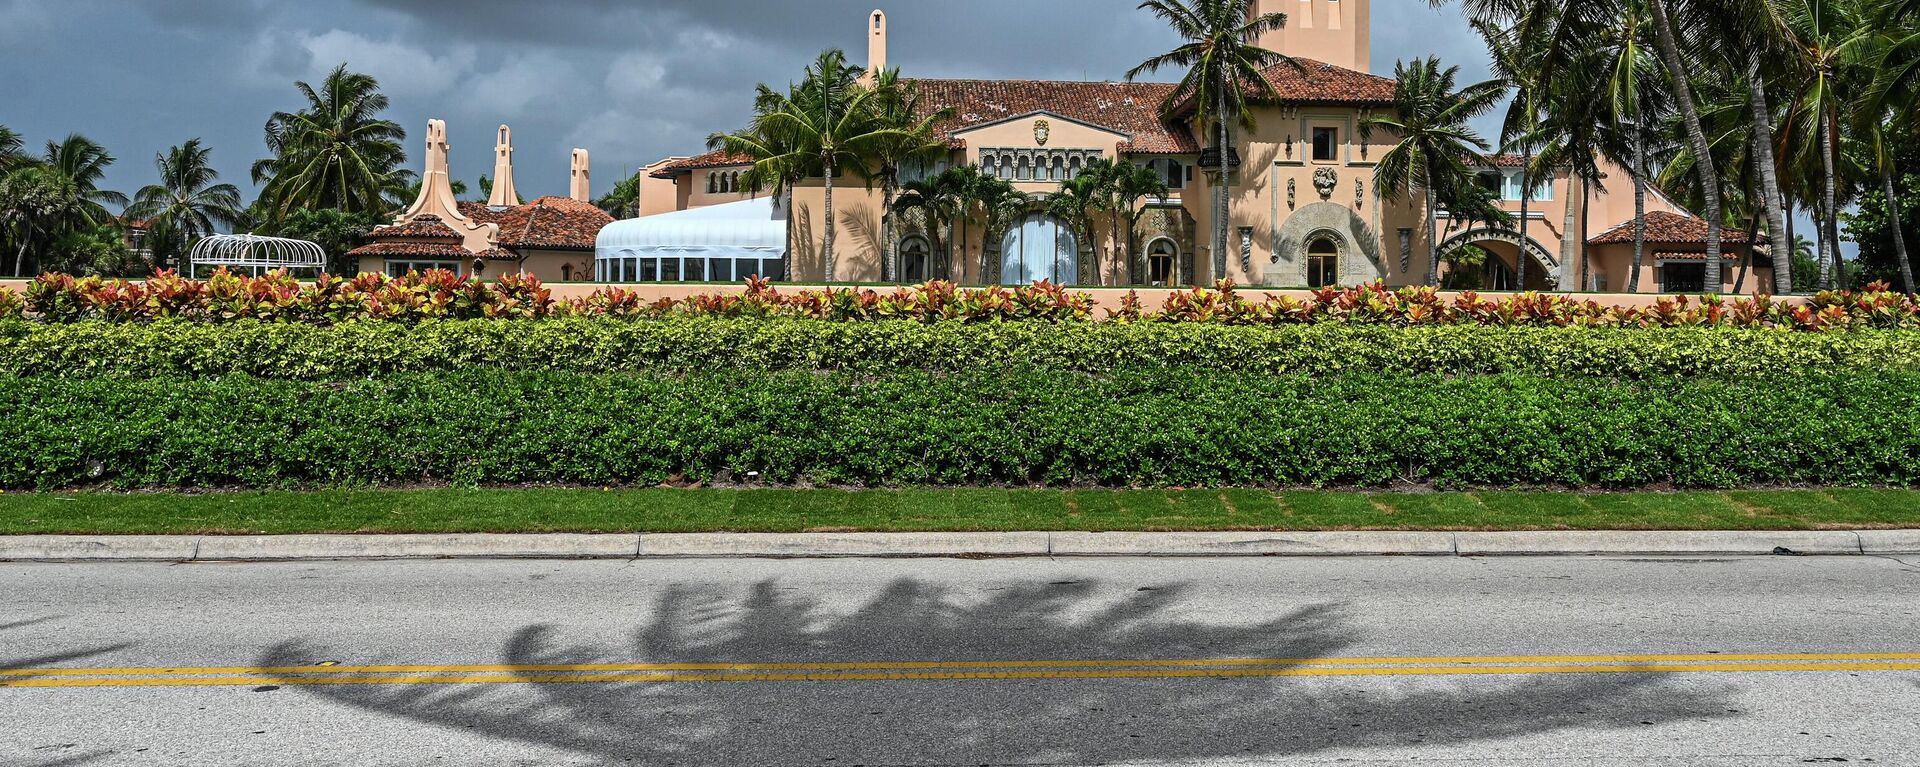 Former US President Donald Trump's residence in Mar-A-Lago, Palm Beach, Florida on August 9, 2022 - Sputnik International, 1920, 18.09.2022